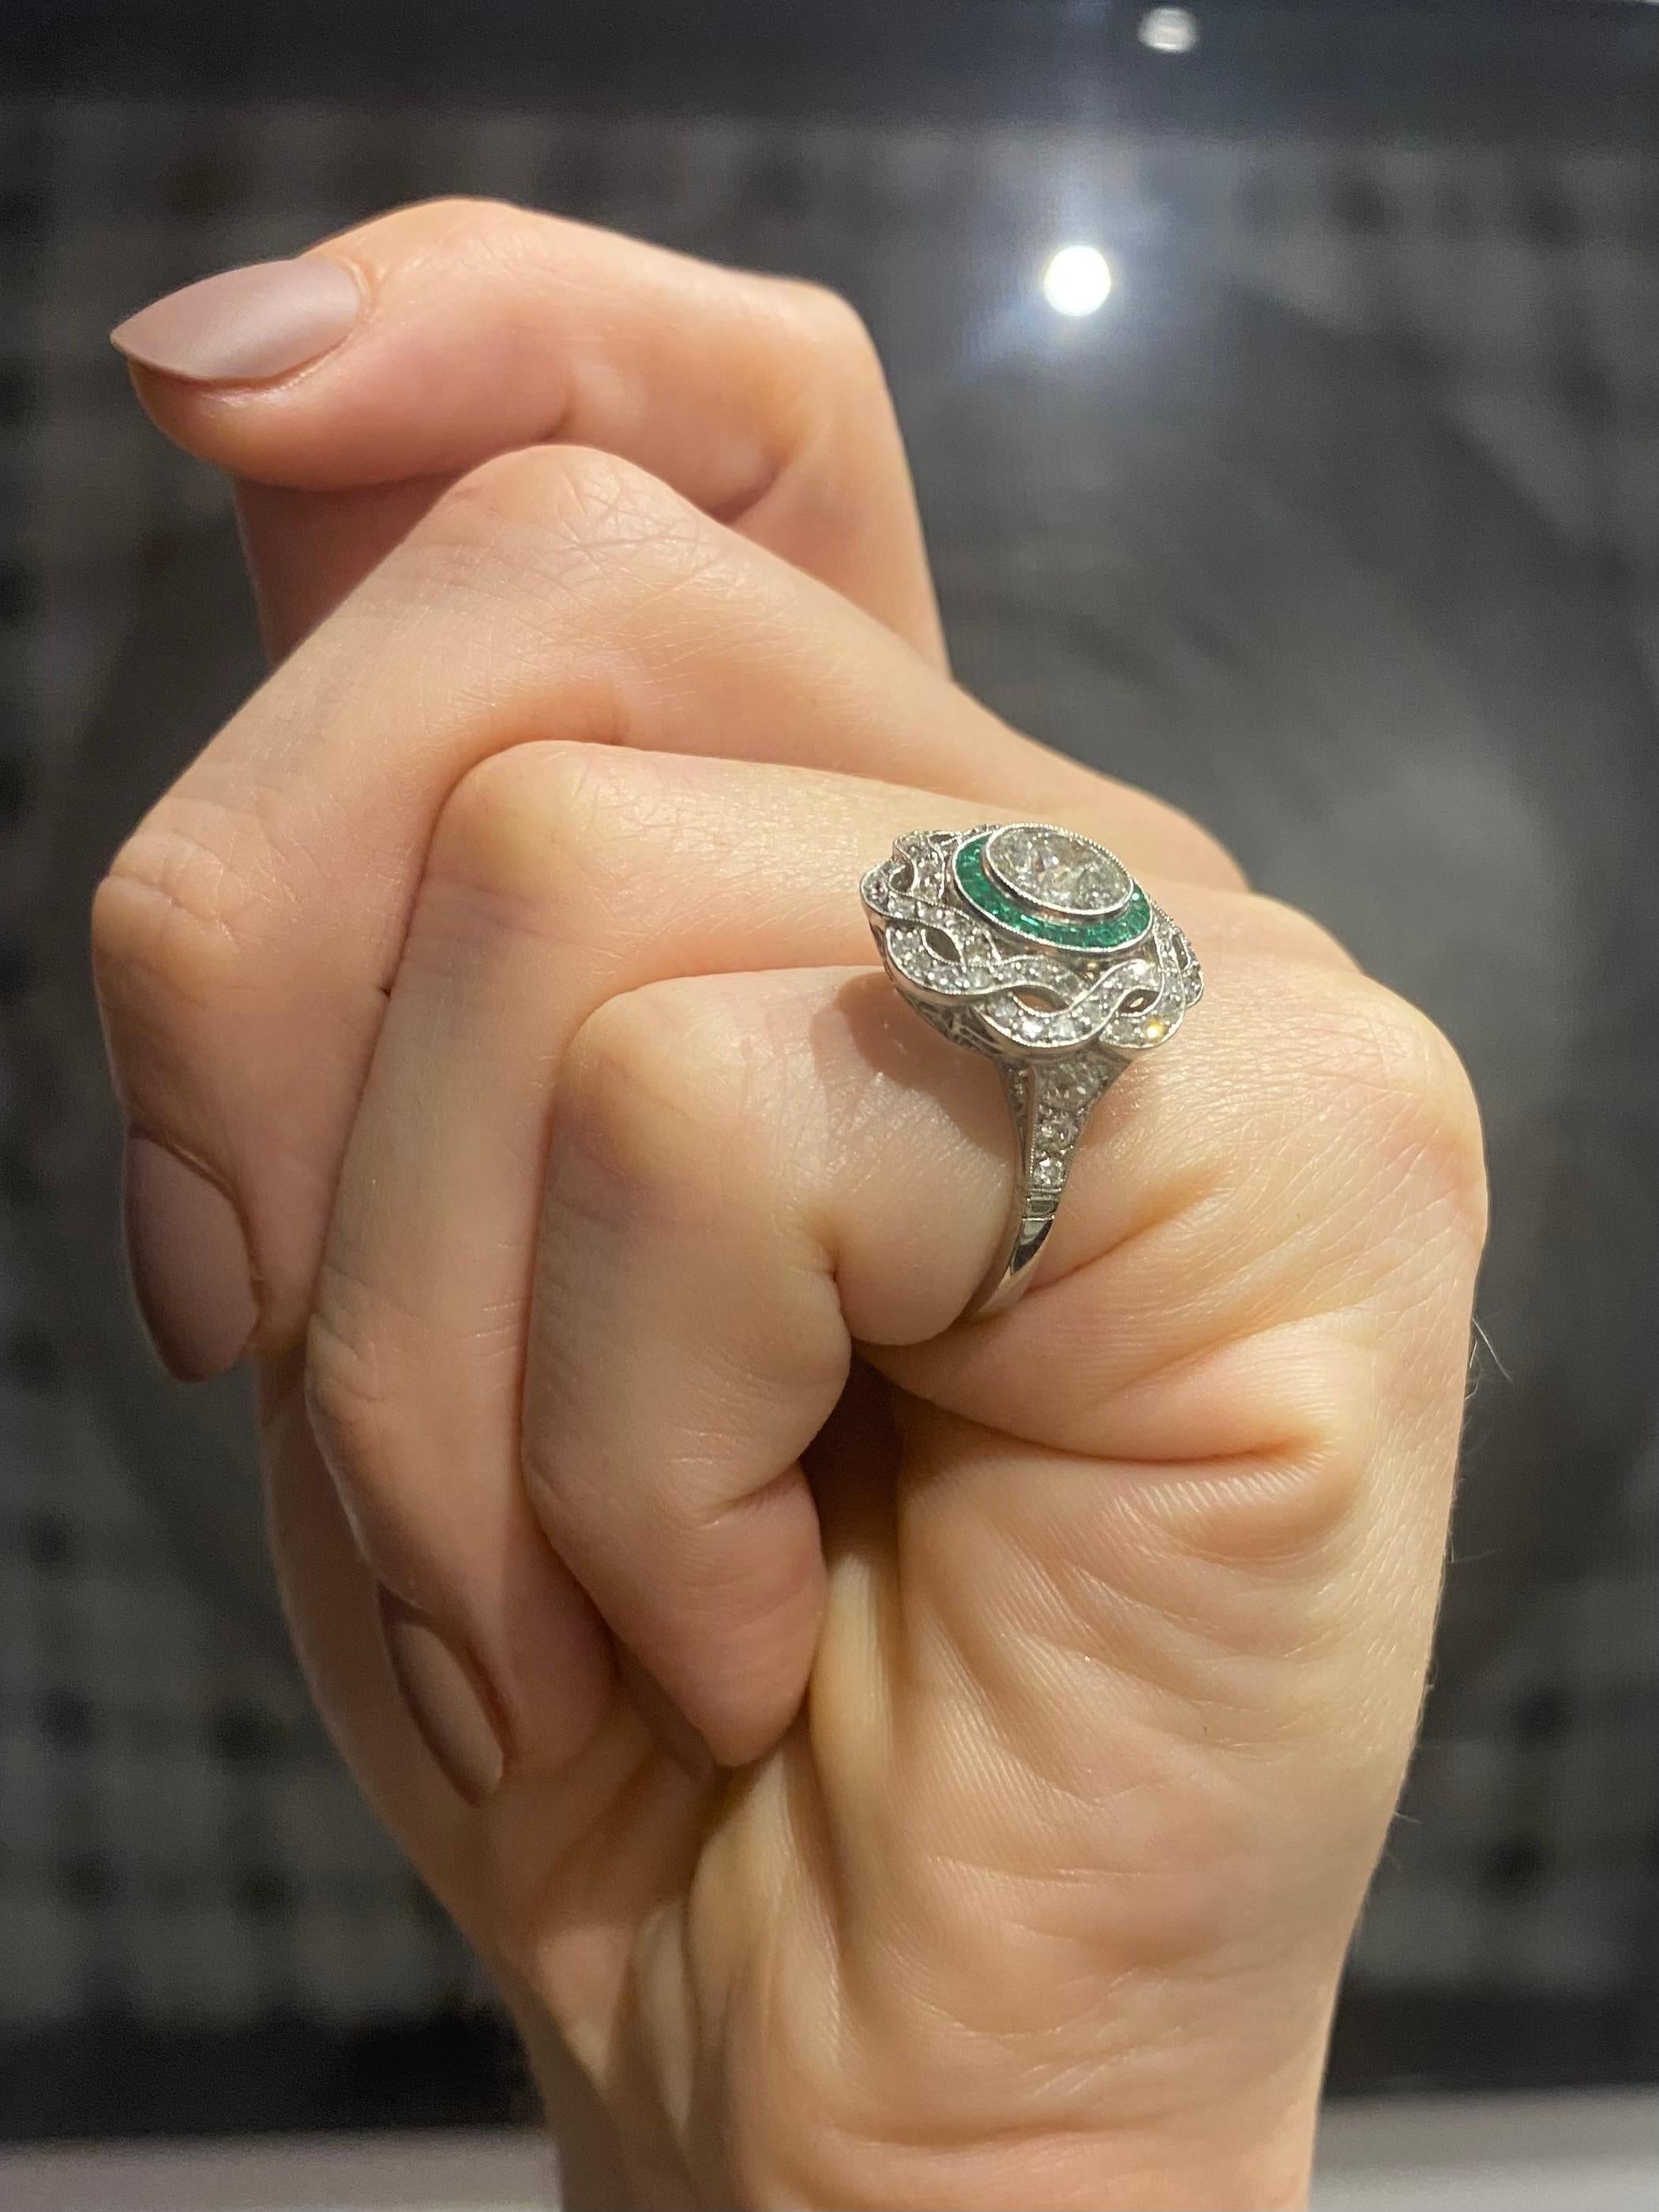 Brilliant Cut Art Deco Classic Halo Ring in Platinum with 3.23 Ctw in Diamonds and Emeralds